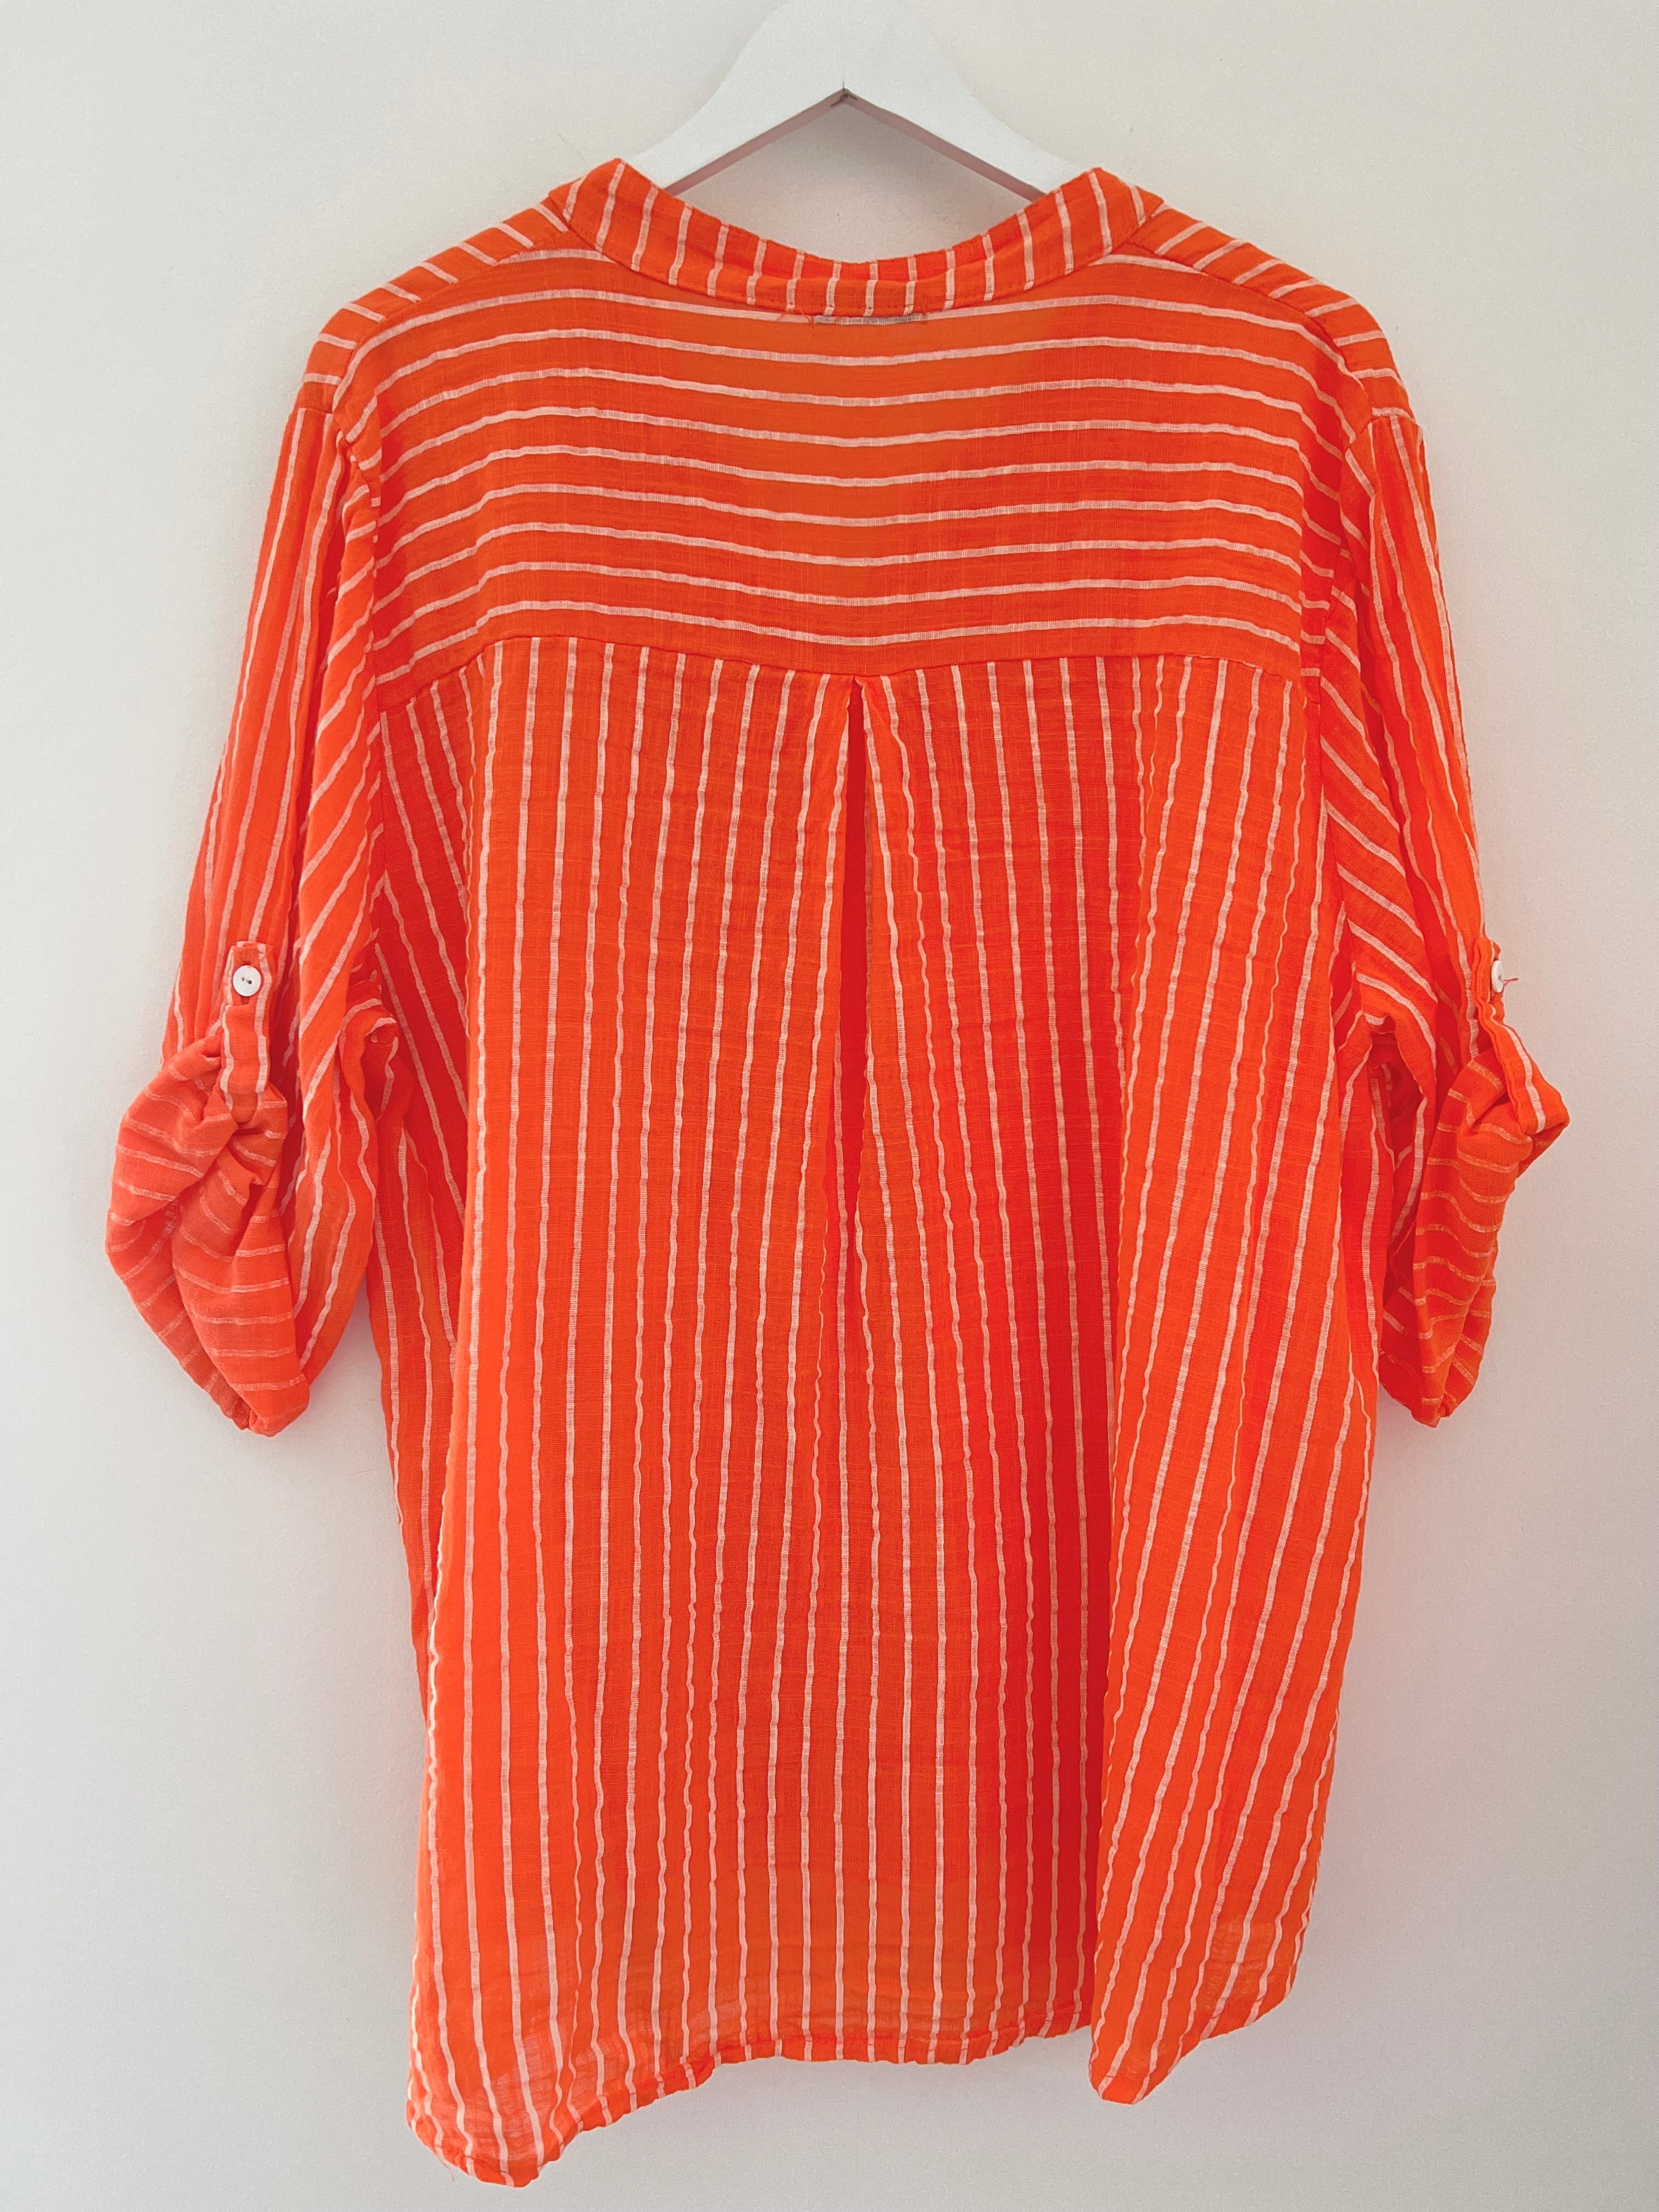 Stripe Shirt in Orange & White